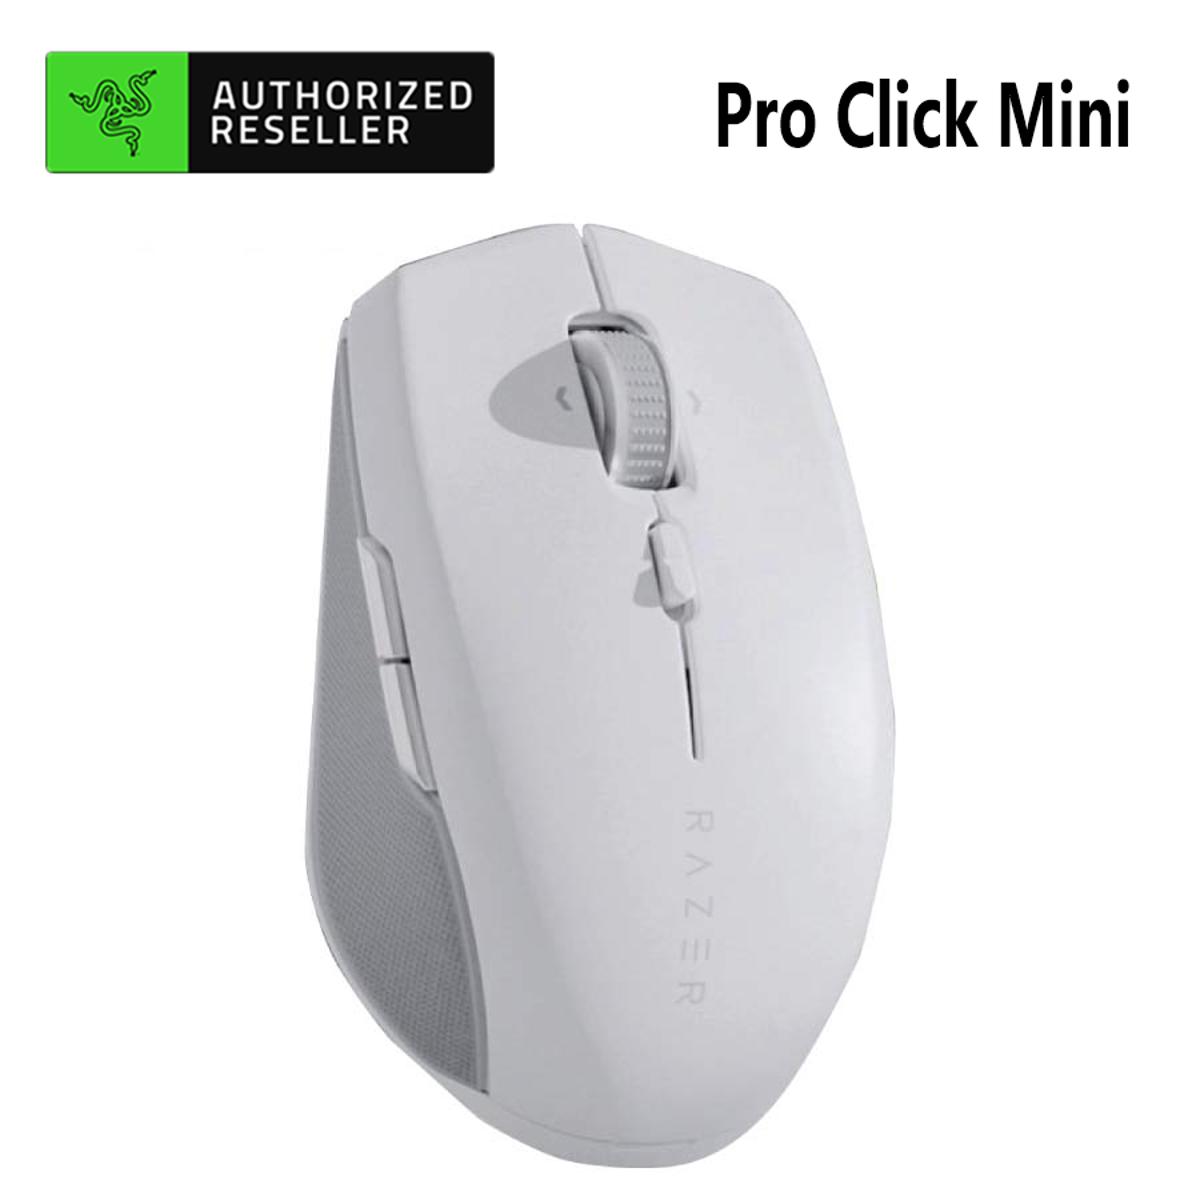  Razer Pro Click Humanscale Wireless Mouse: Ergonomic